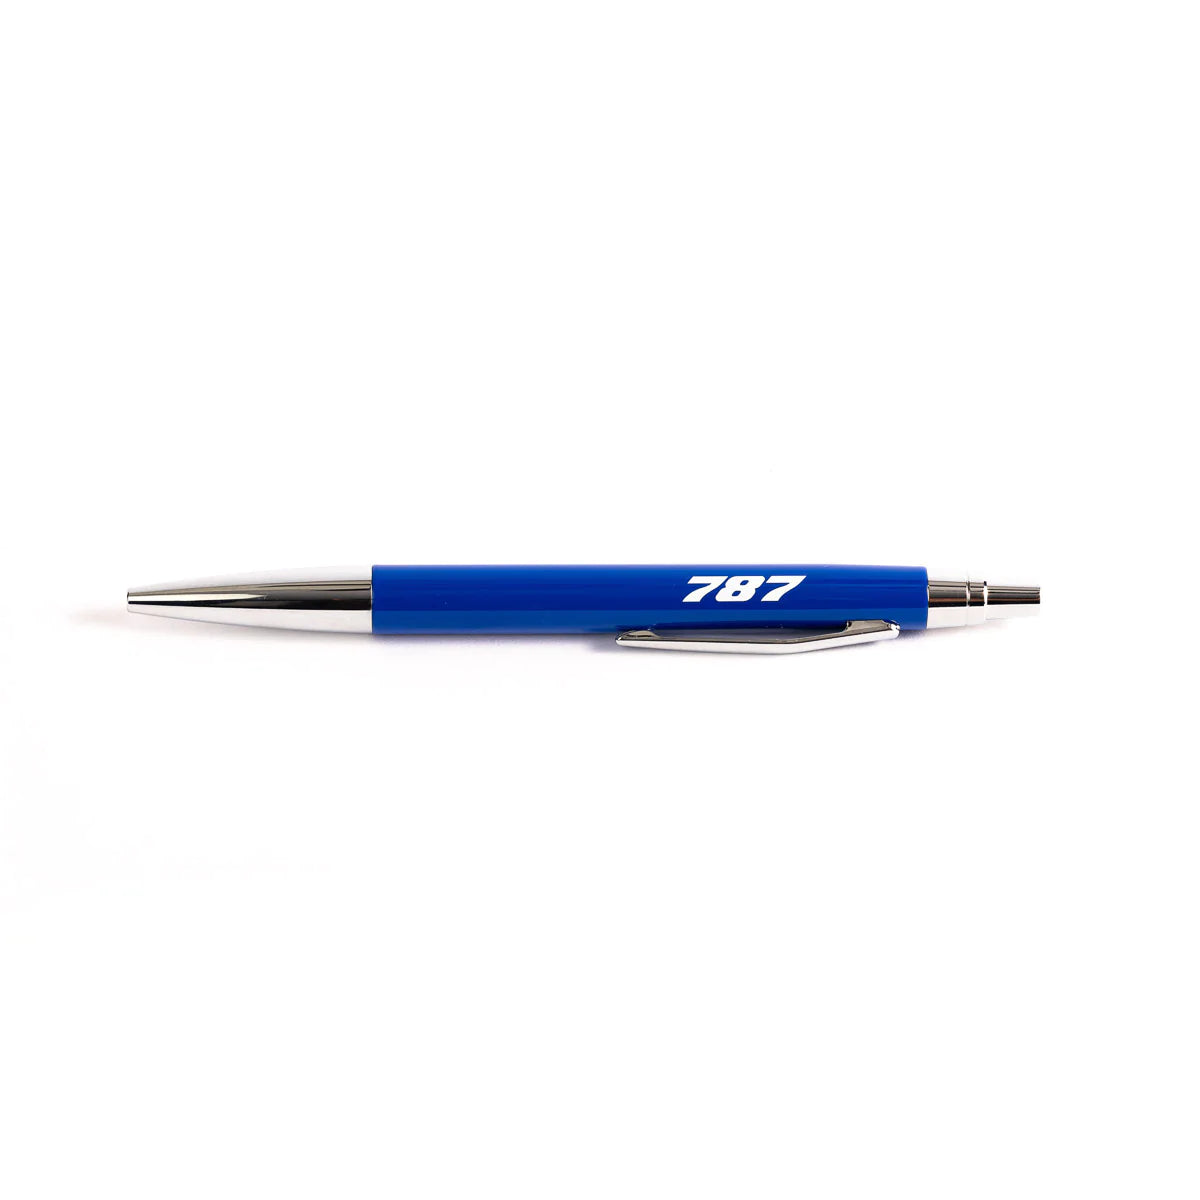 Boeing Stratotype/ Program Pen